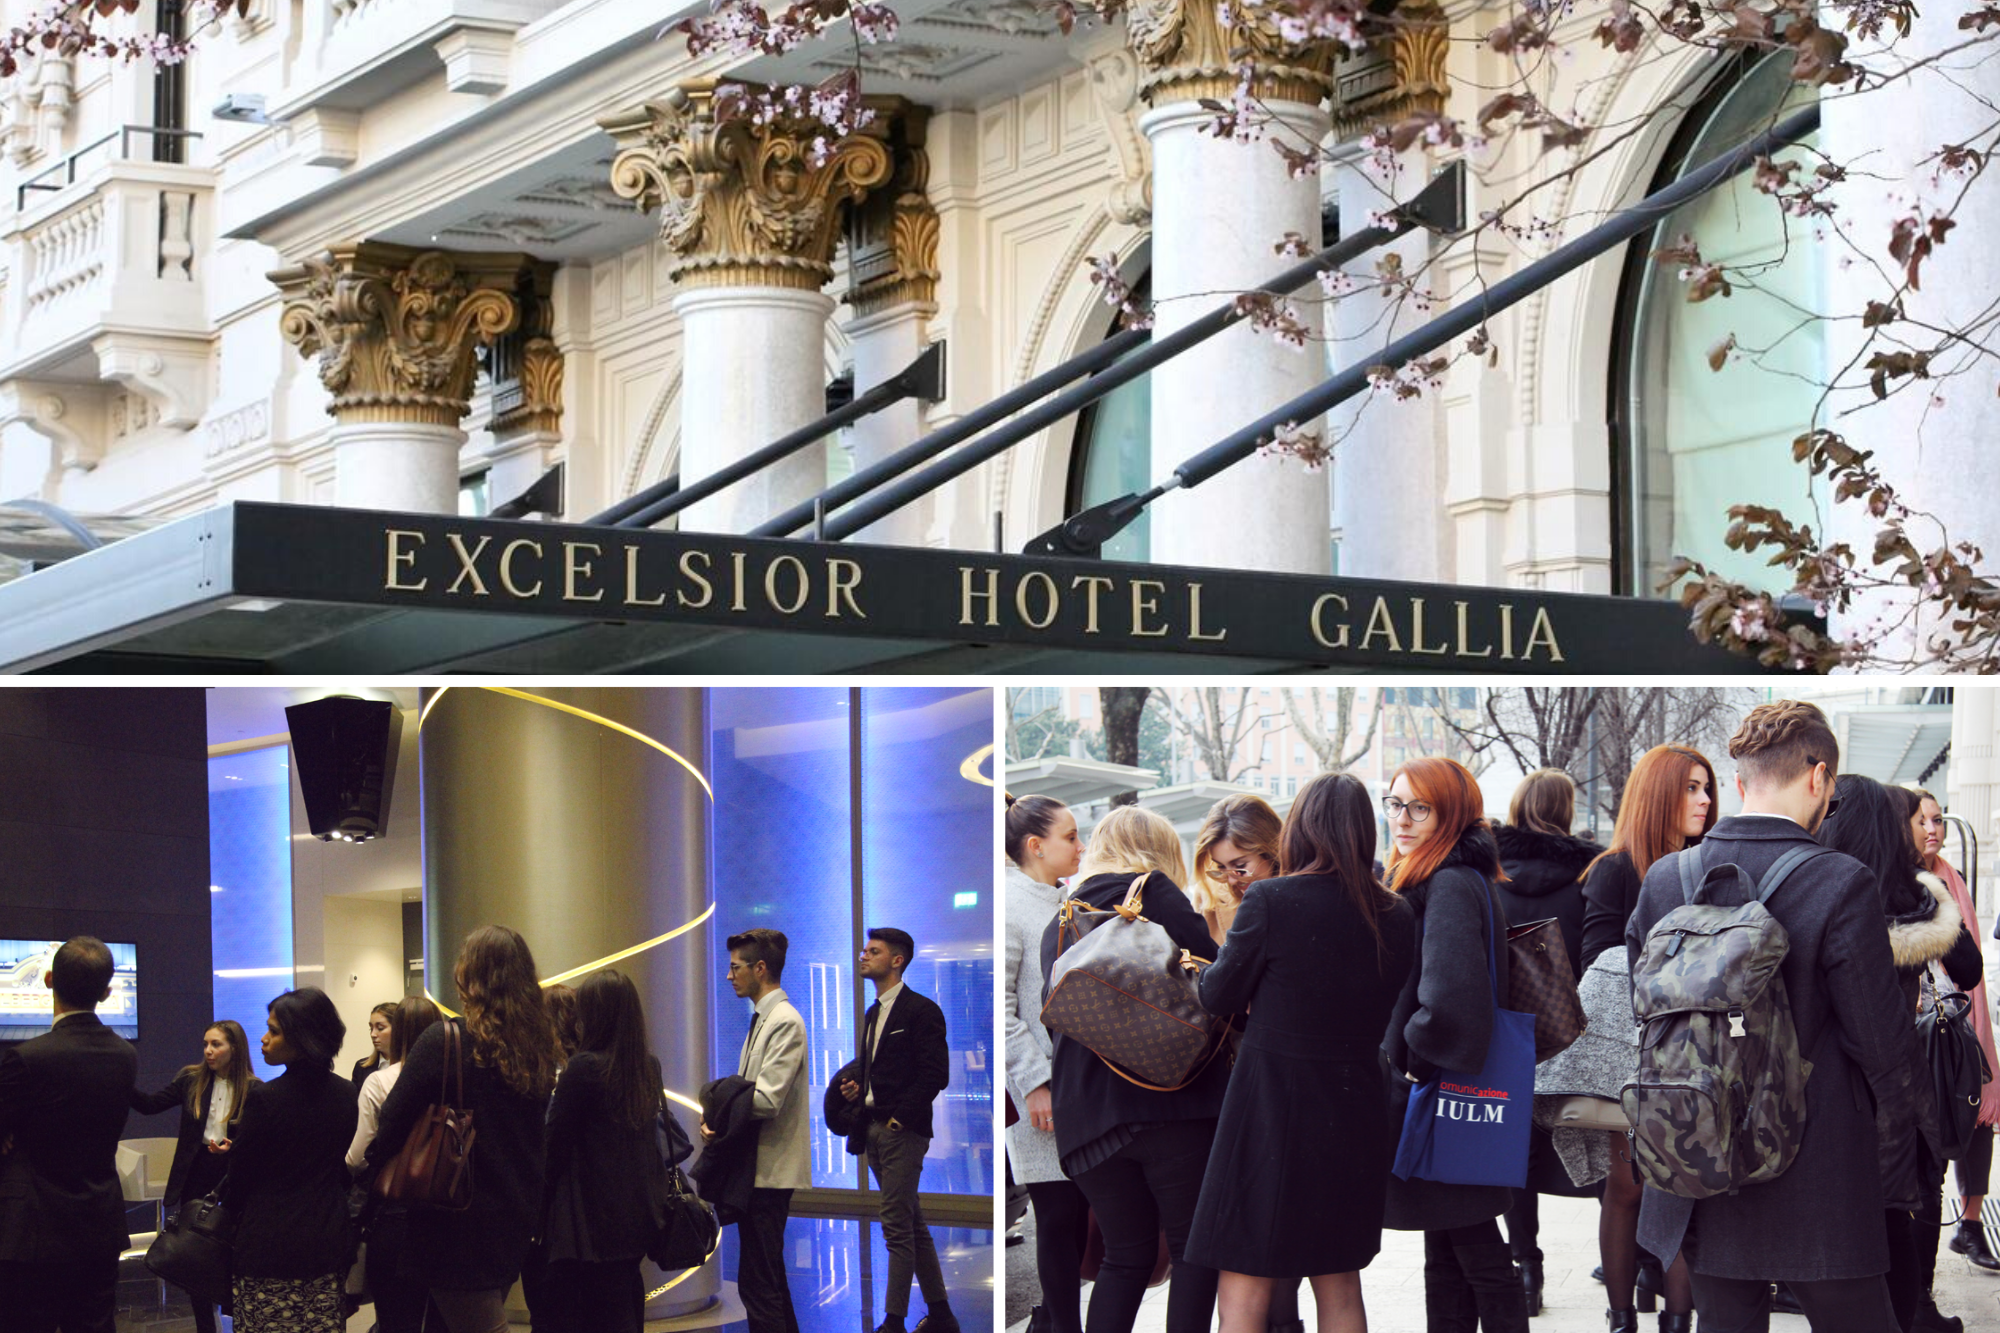 Excelsior Hotel Gallia - Company visit